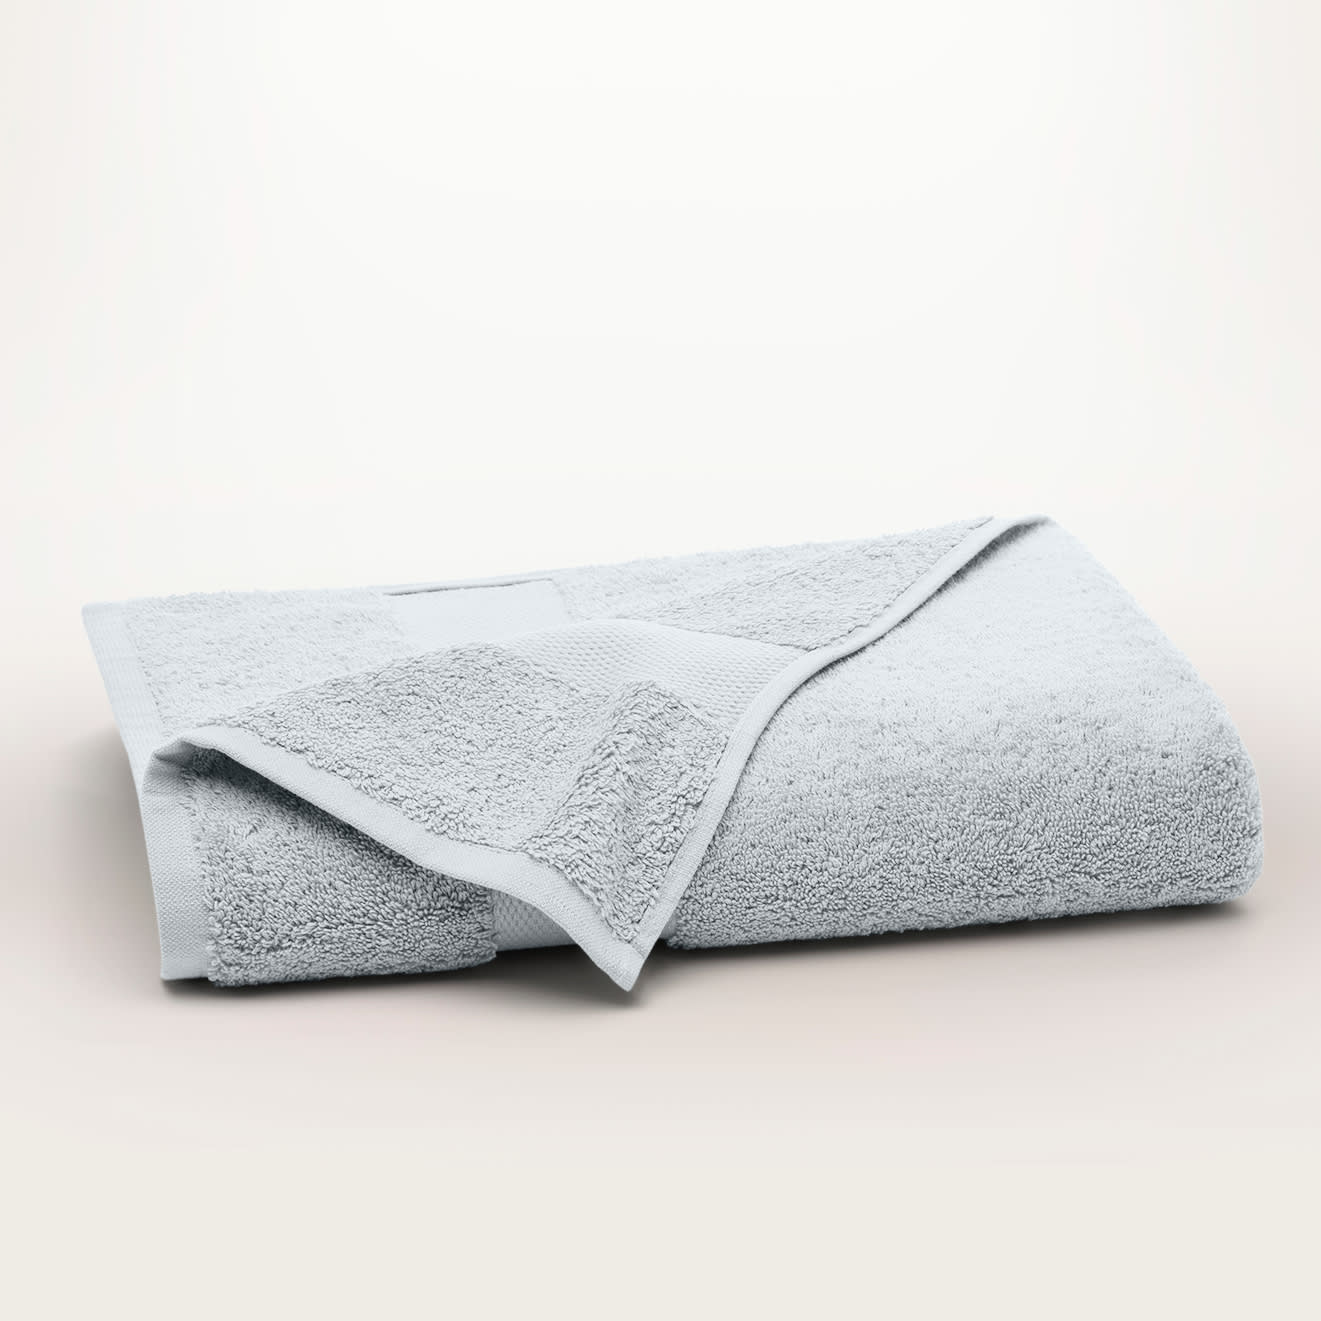 https://cdn.apartmenttherapy.info/image/upload/v1677546081/gen-workflow/product-database/shore-boll-branch-plus-towel.jpg